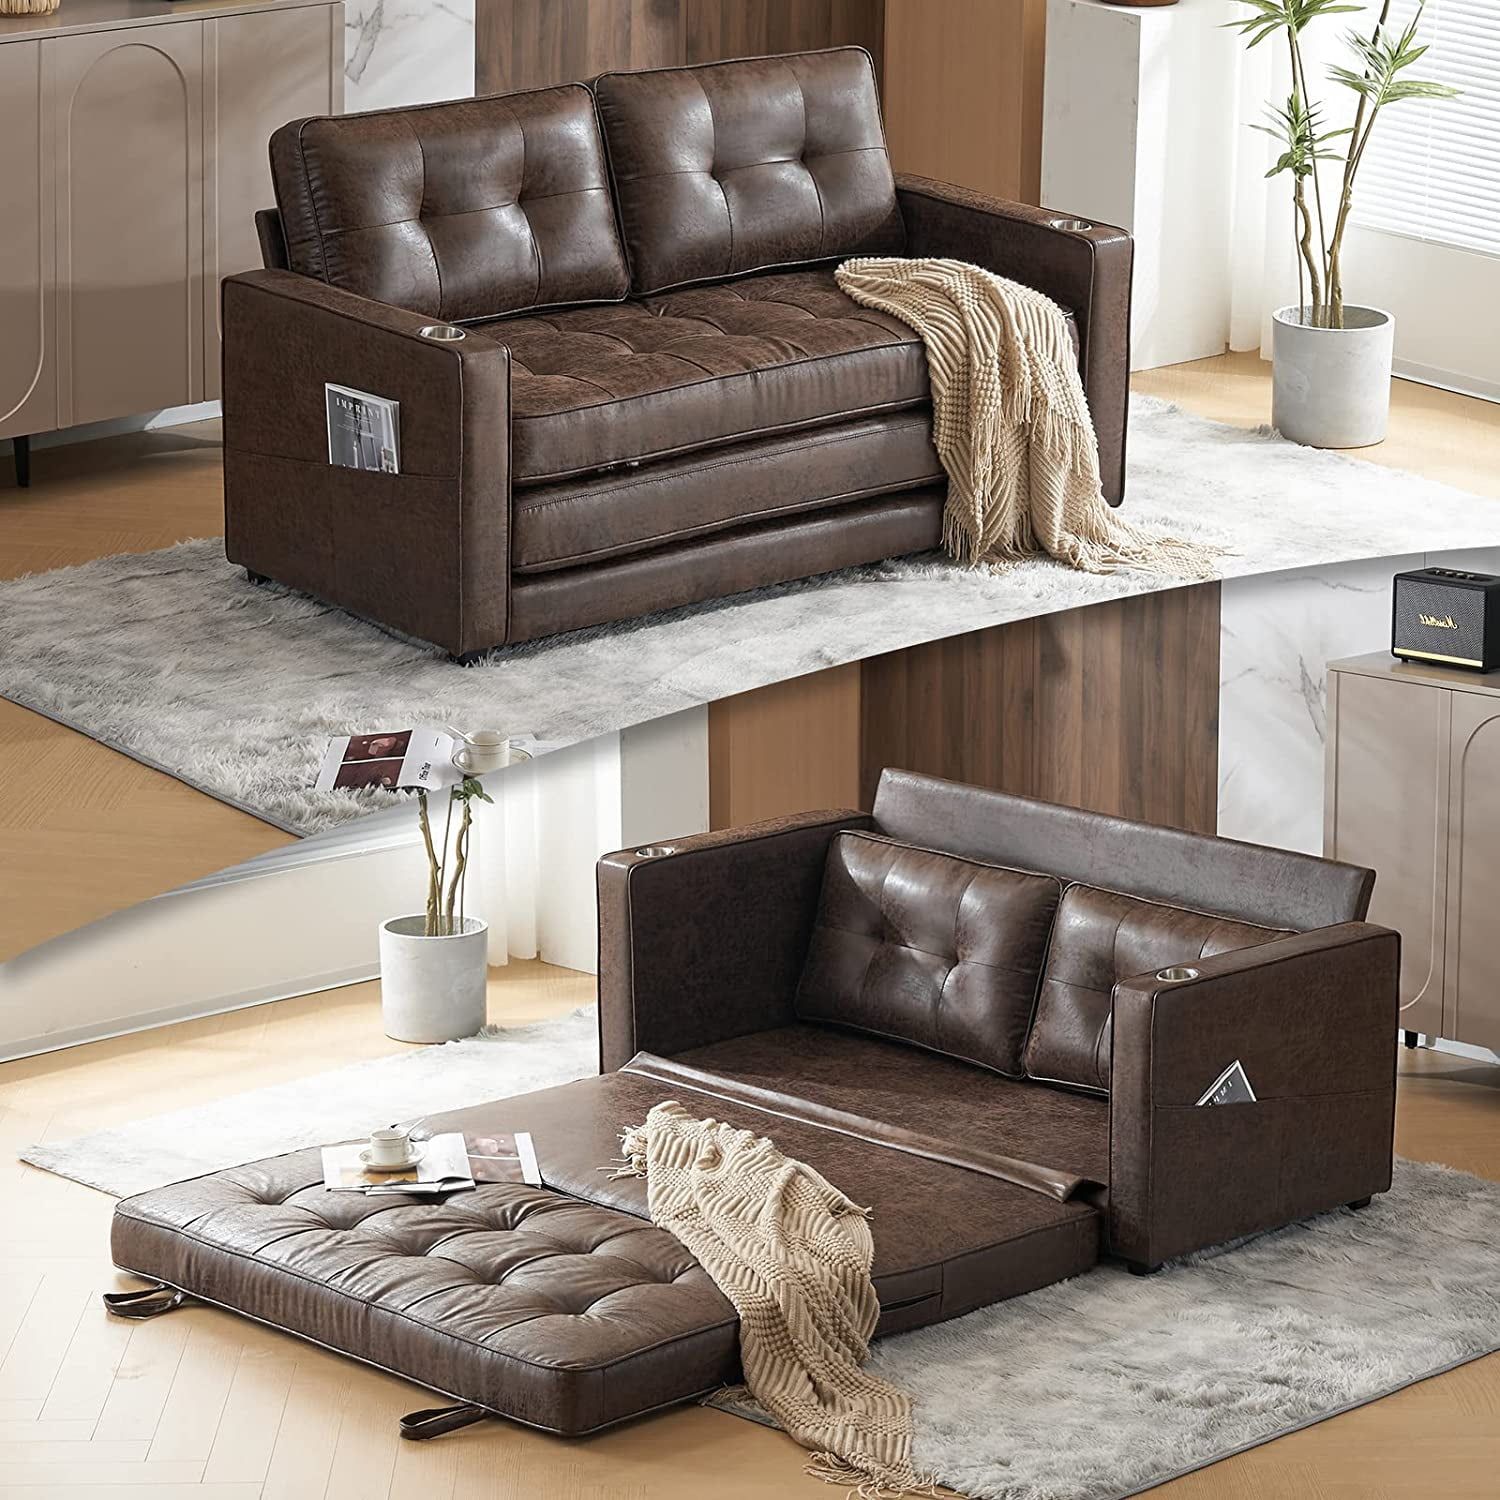 Serta Tacoma Convertible Sofa in Cinnamon Red Fabric Upholstery 